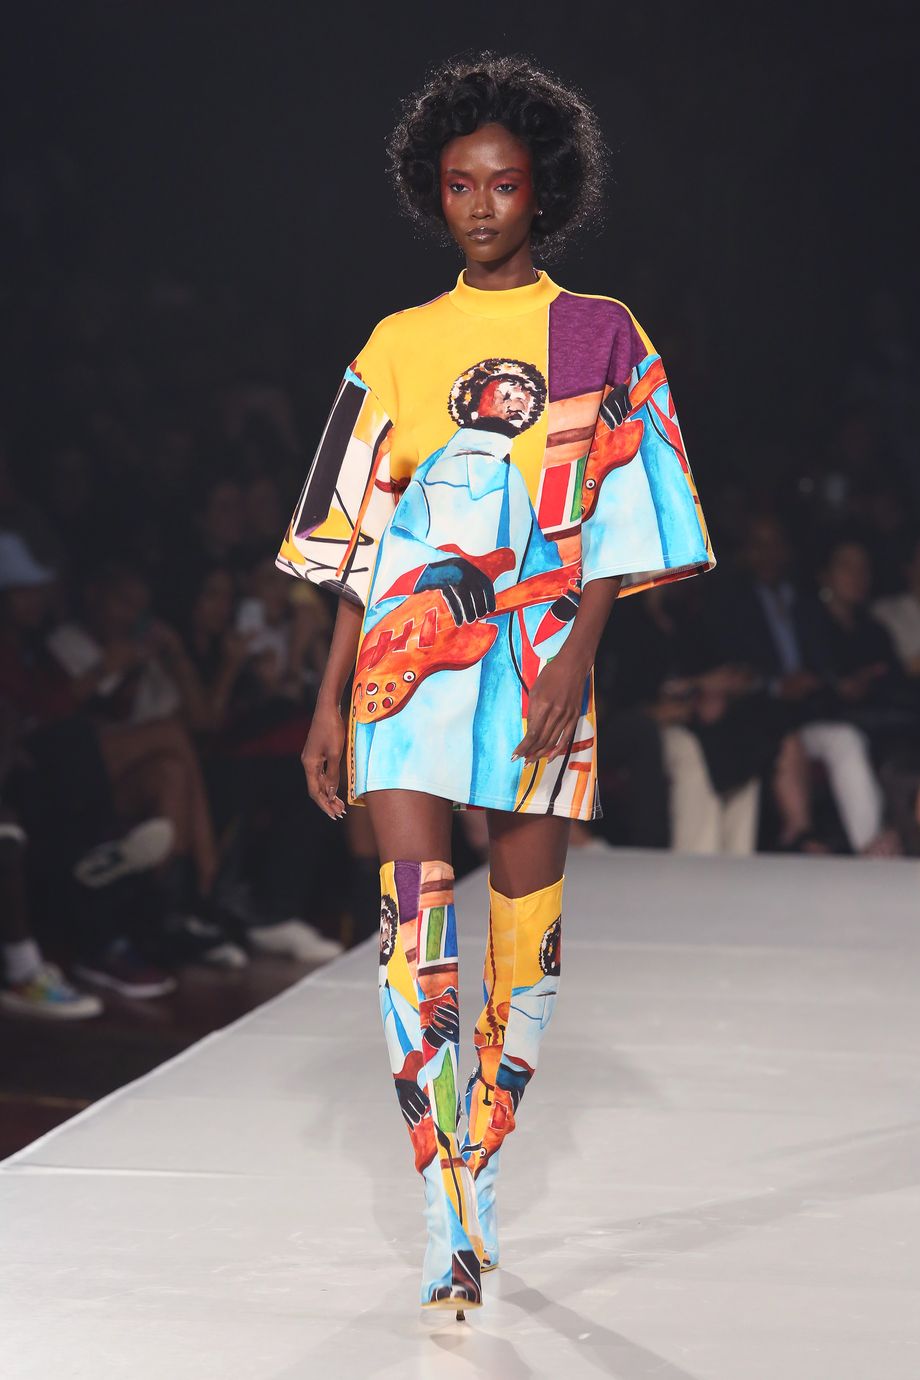 Famous Haitian-American fashion designer Kerby Jean-Raymond fights